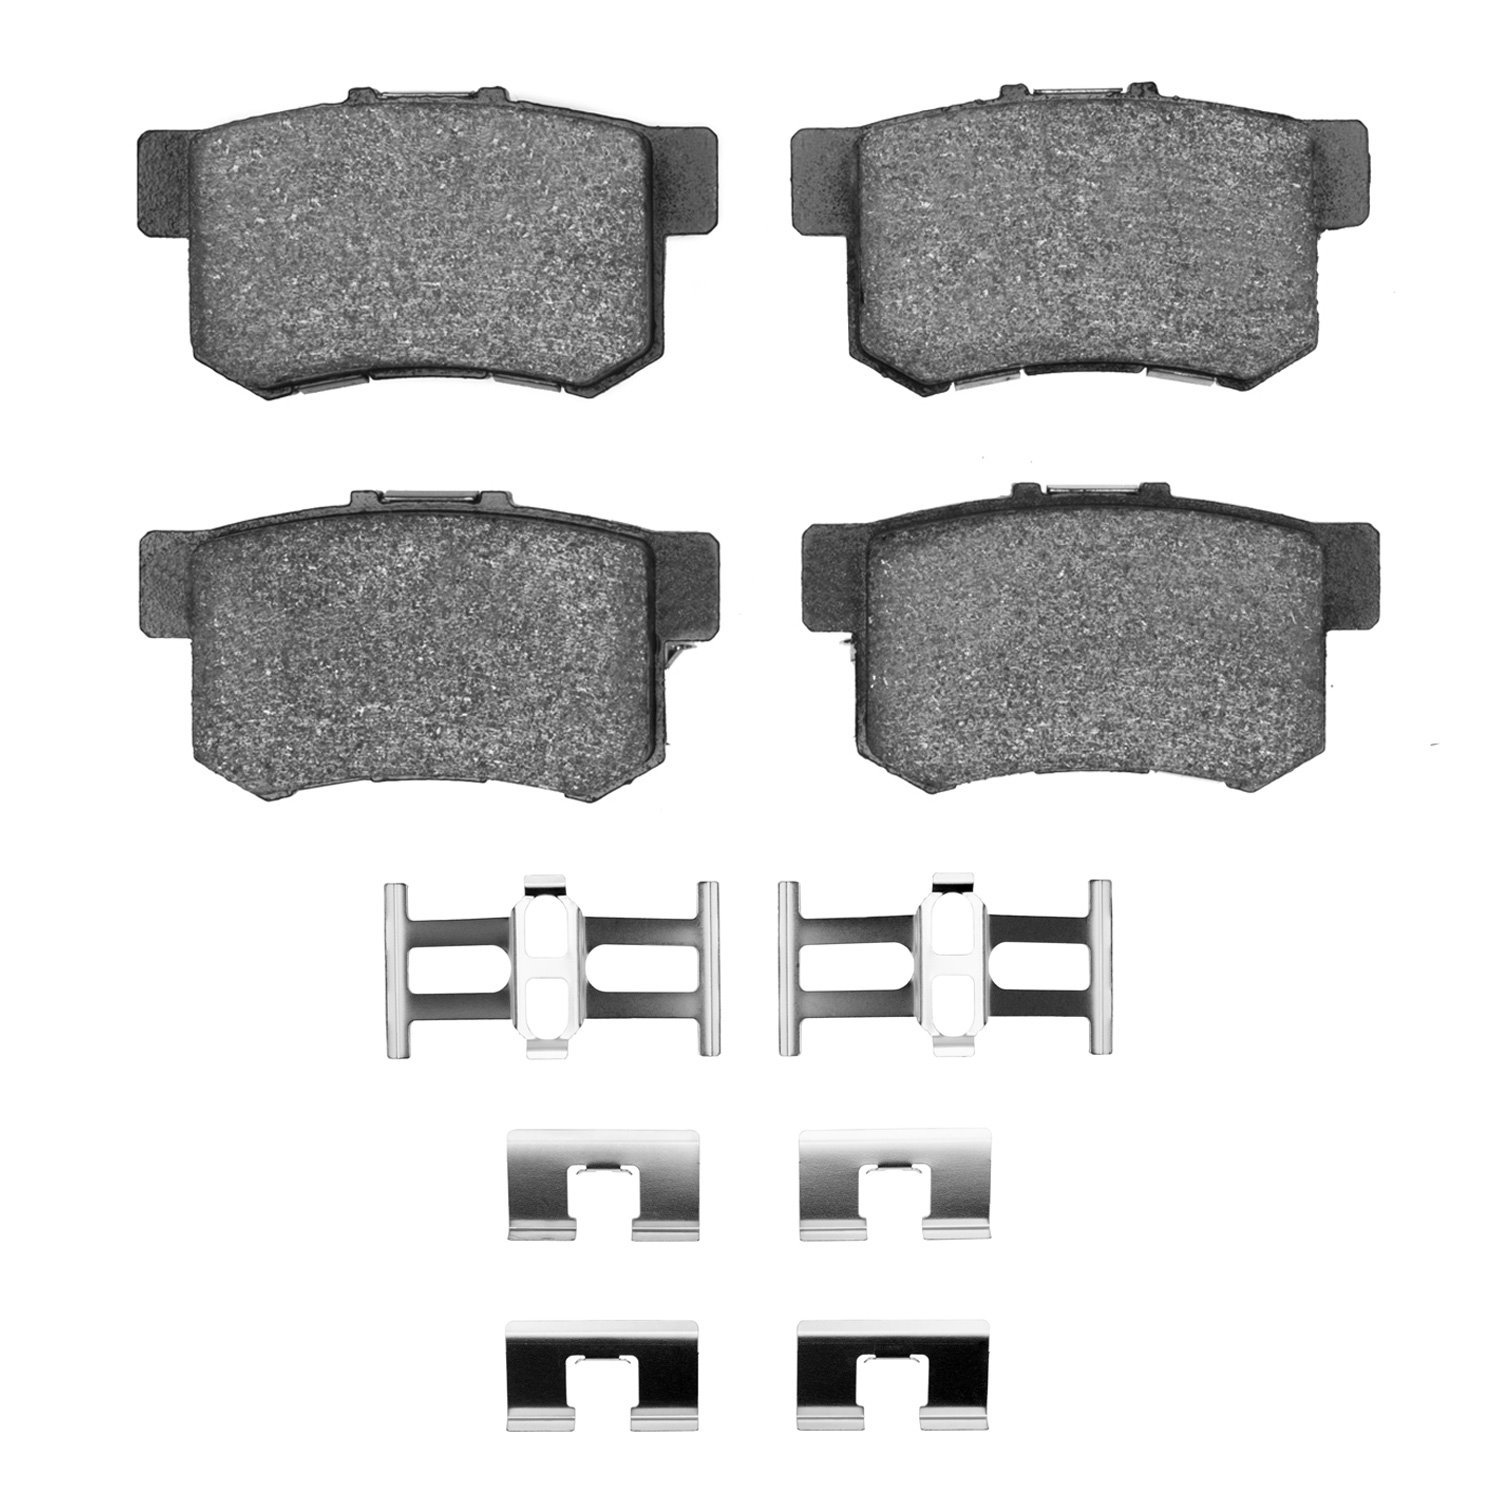 1551-0537-01 5000 Advanced Ceramic Brake Pads & Hardware Kit, Fits Select Multiple Makes/Models, Position: Rear